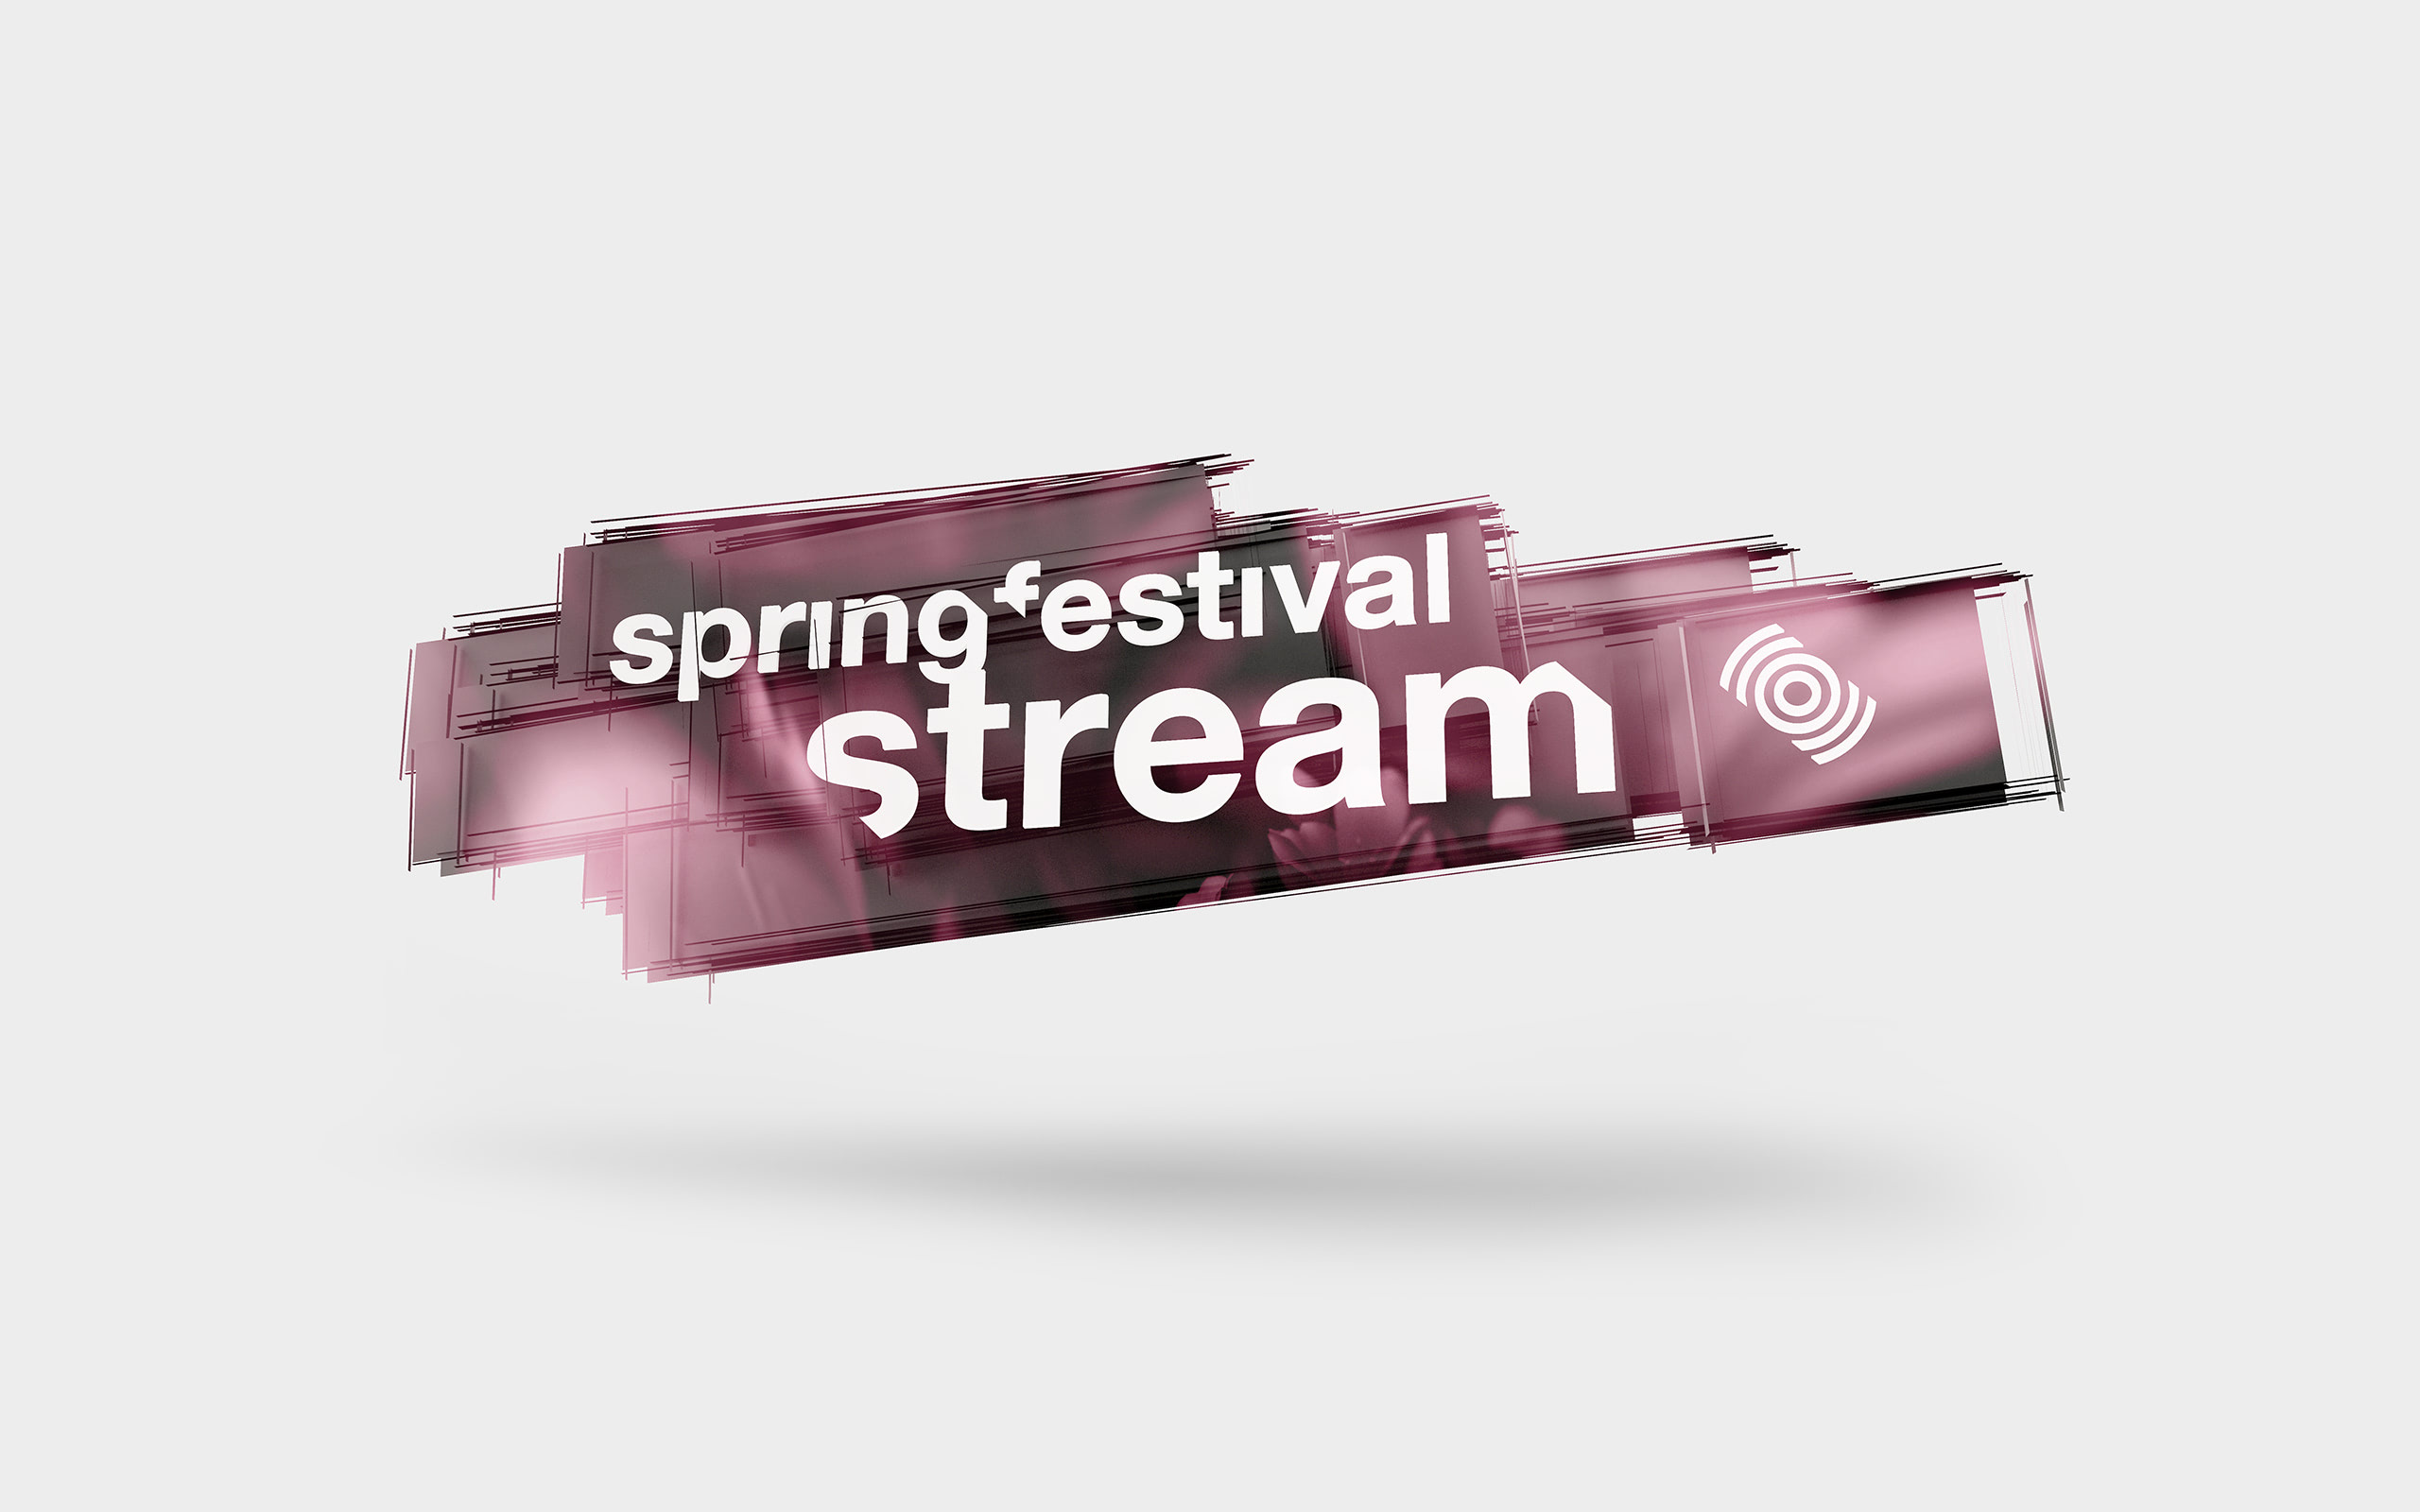 springfestival stream / springfestival graz